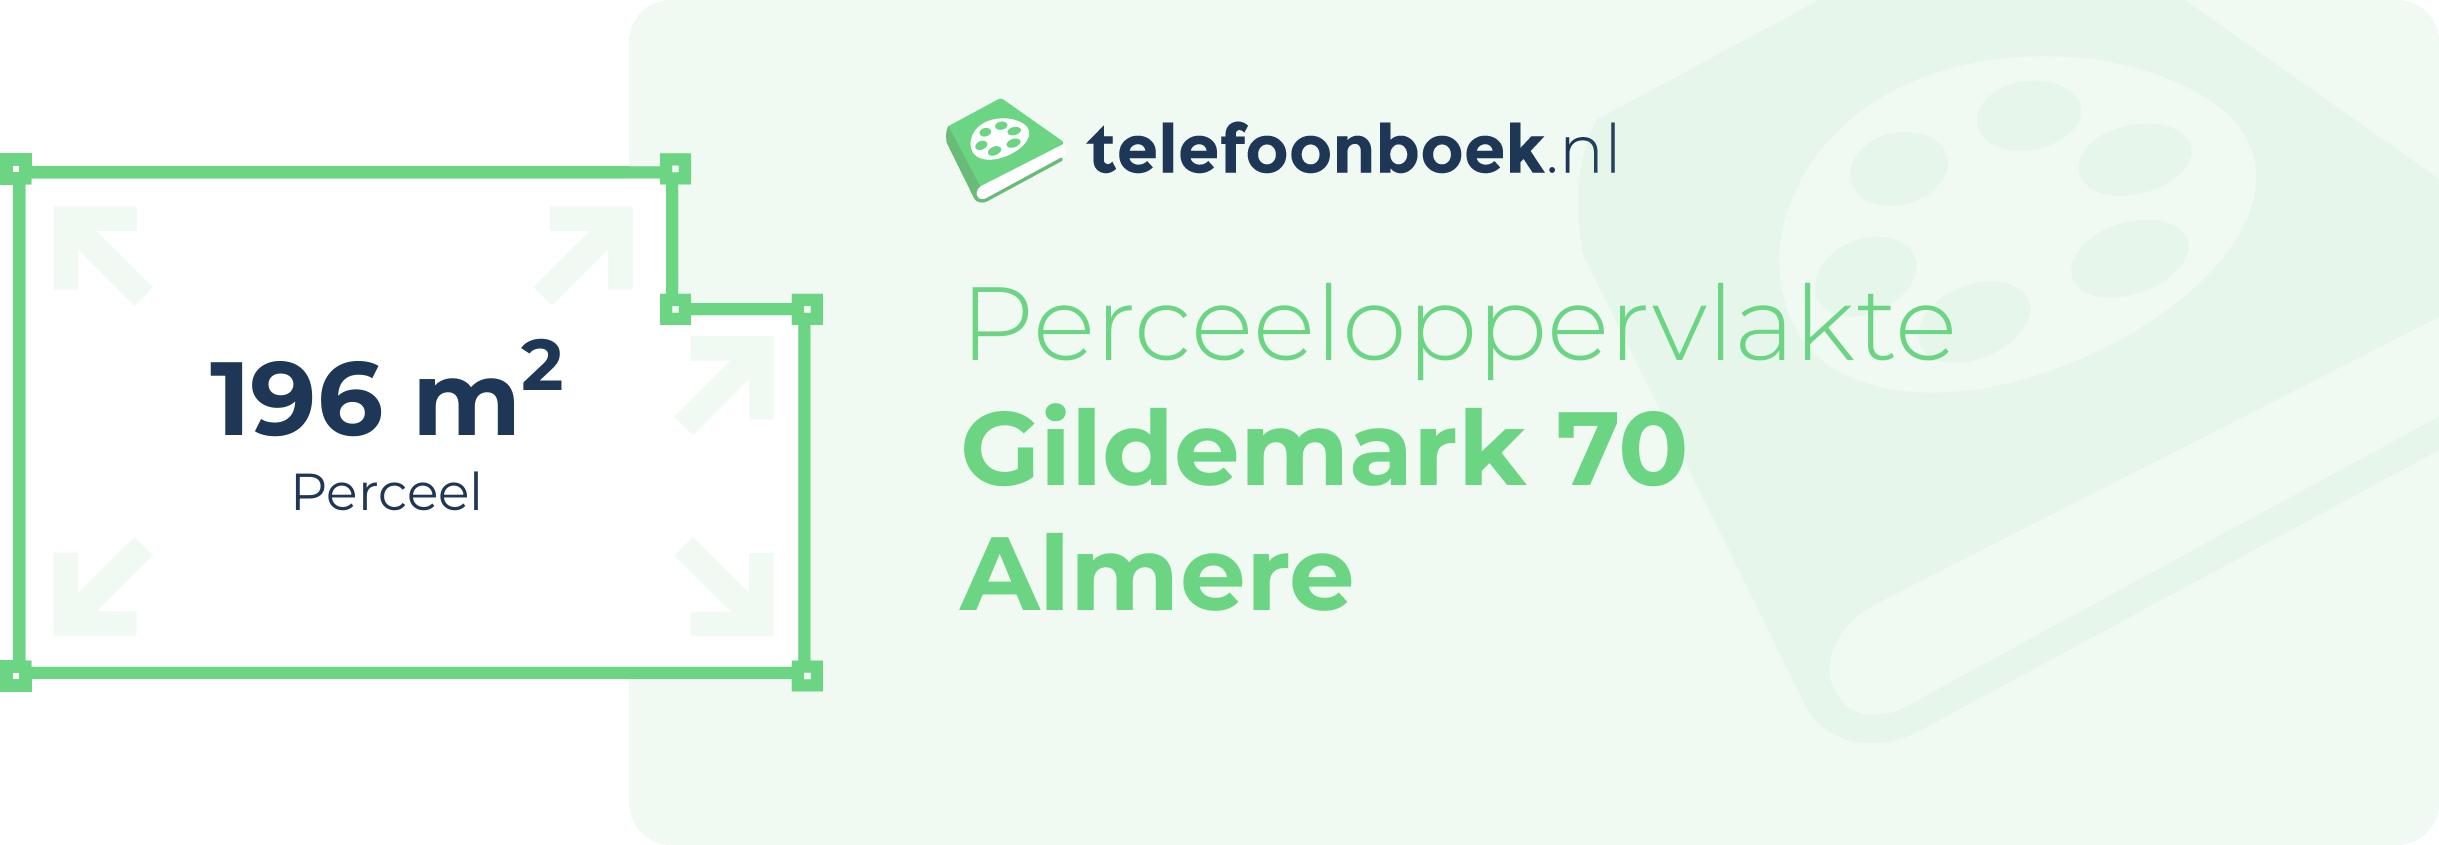 Perceeloppervlakte Gildemark 70 Almere